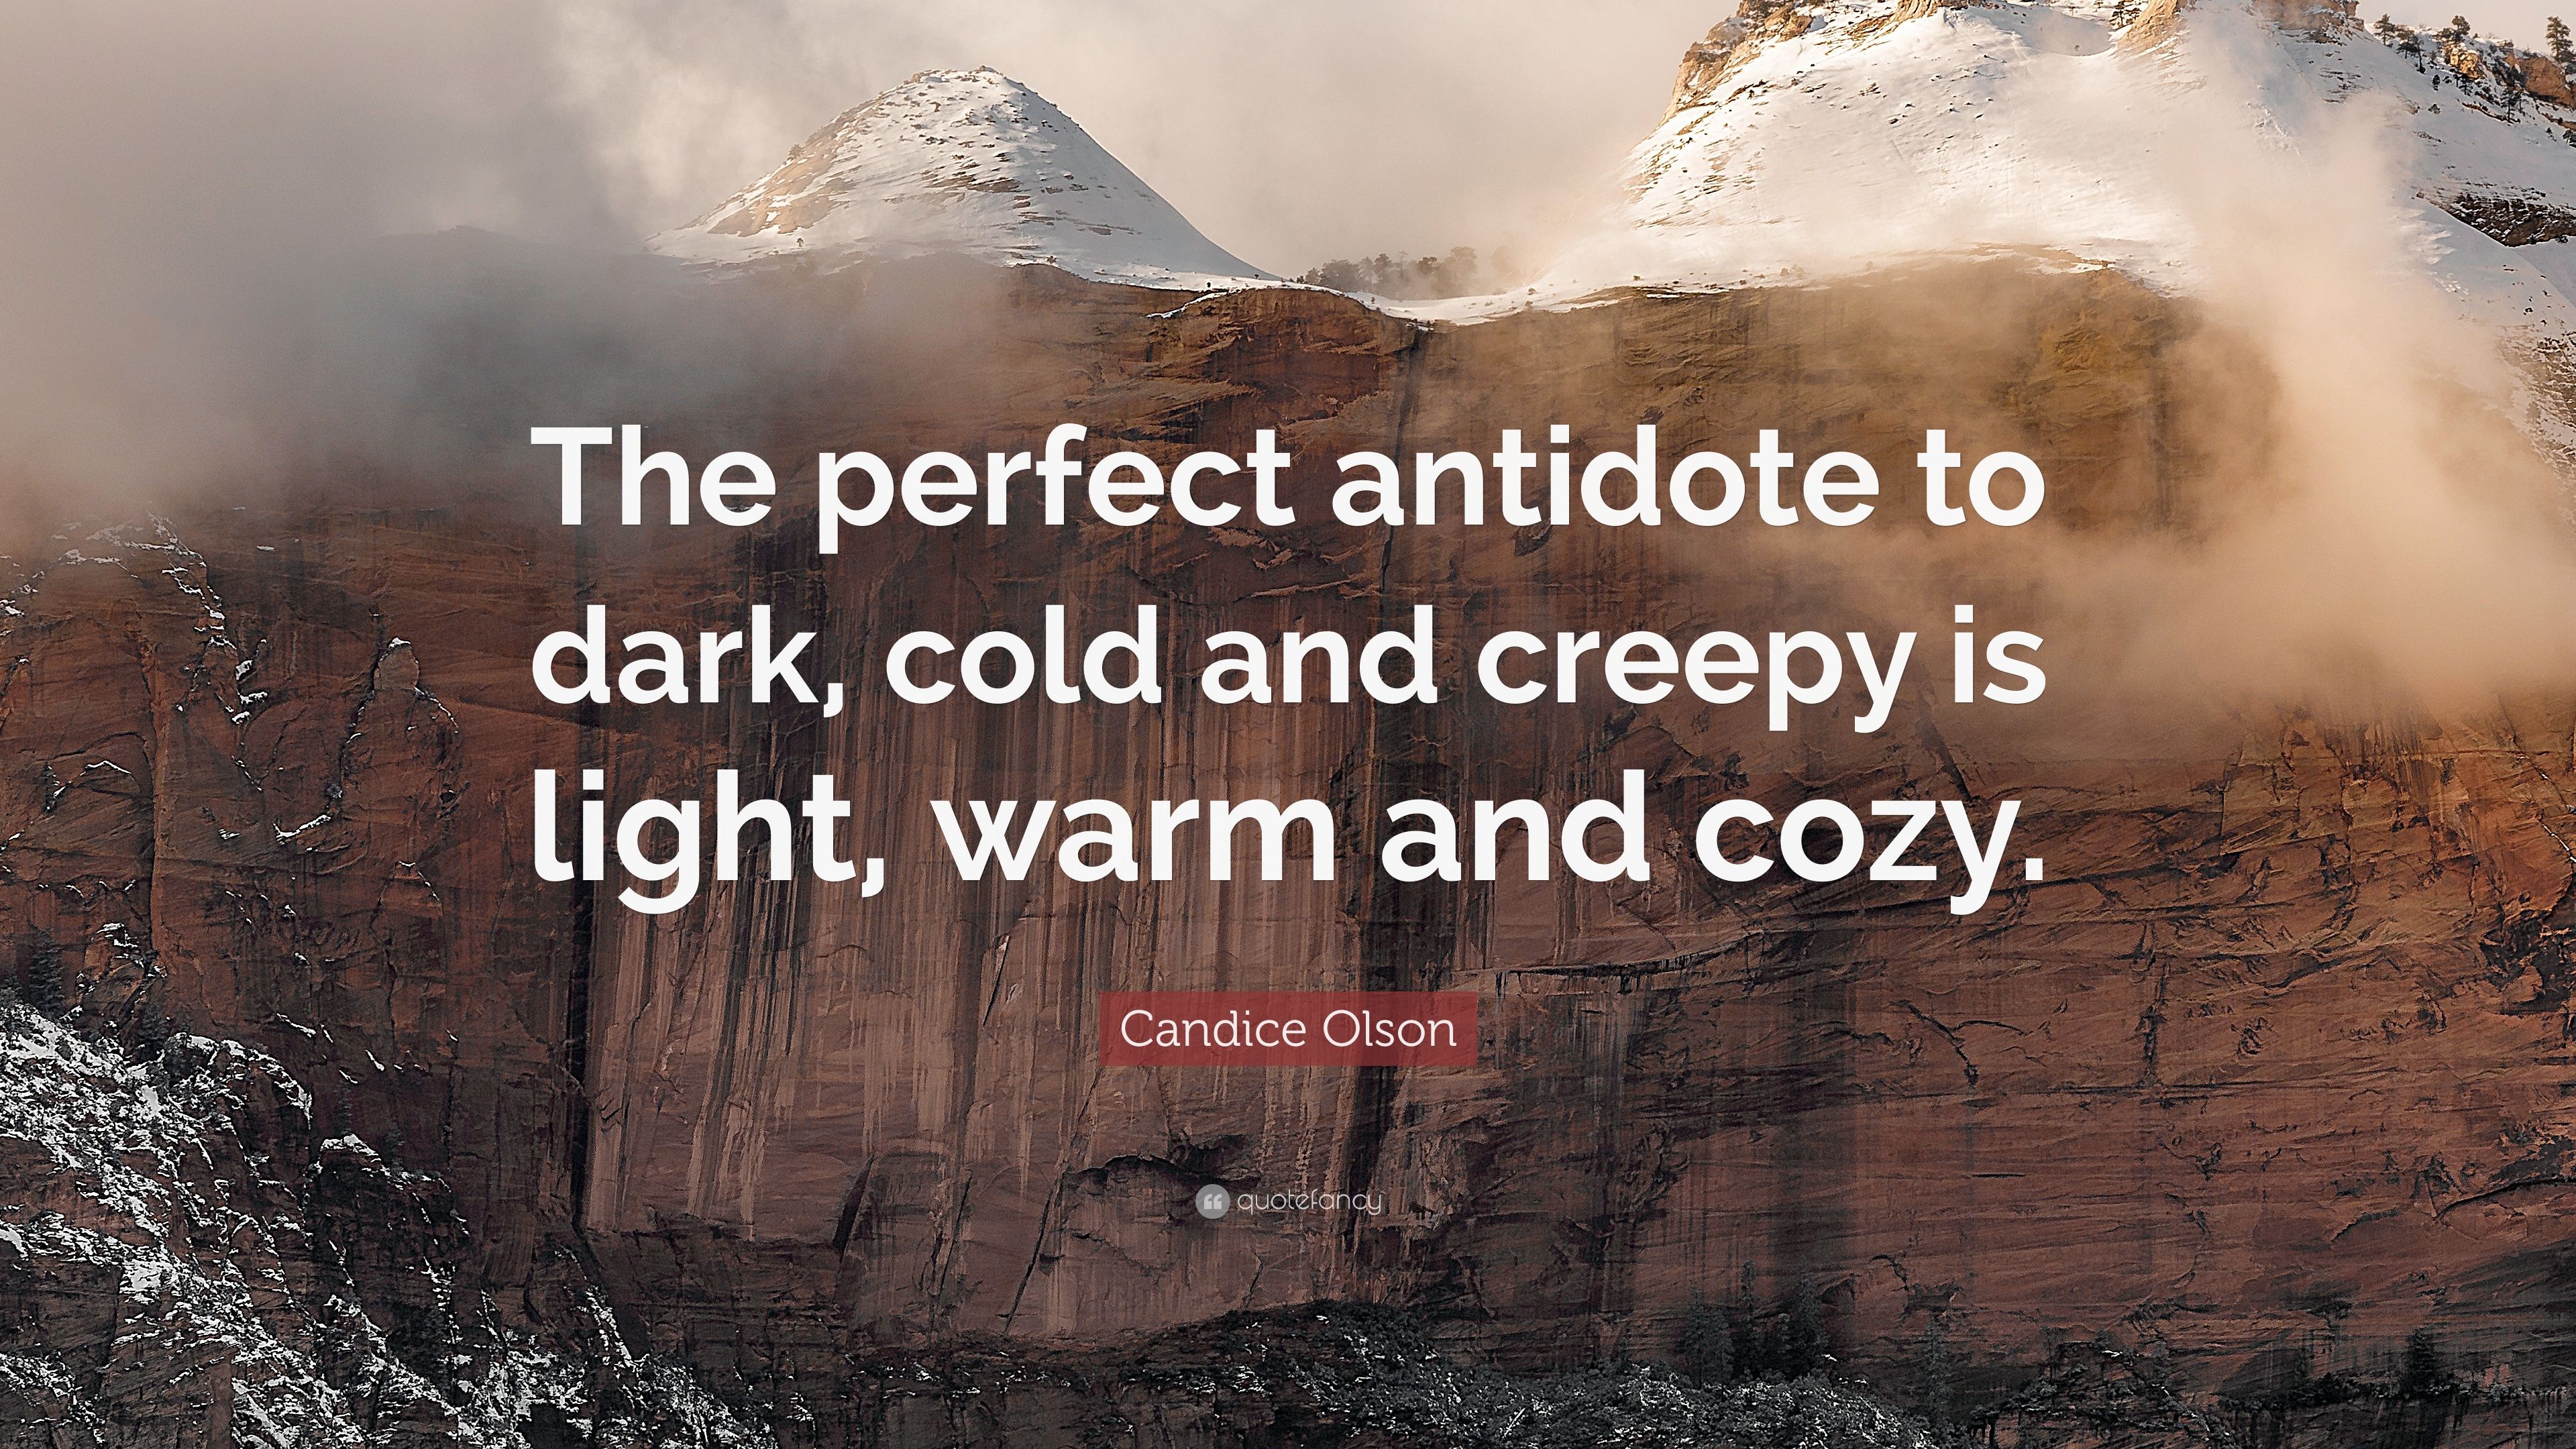 Candice Olson Quote: “The perfect antidote to dark, cold